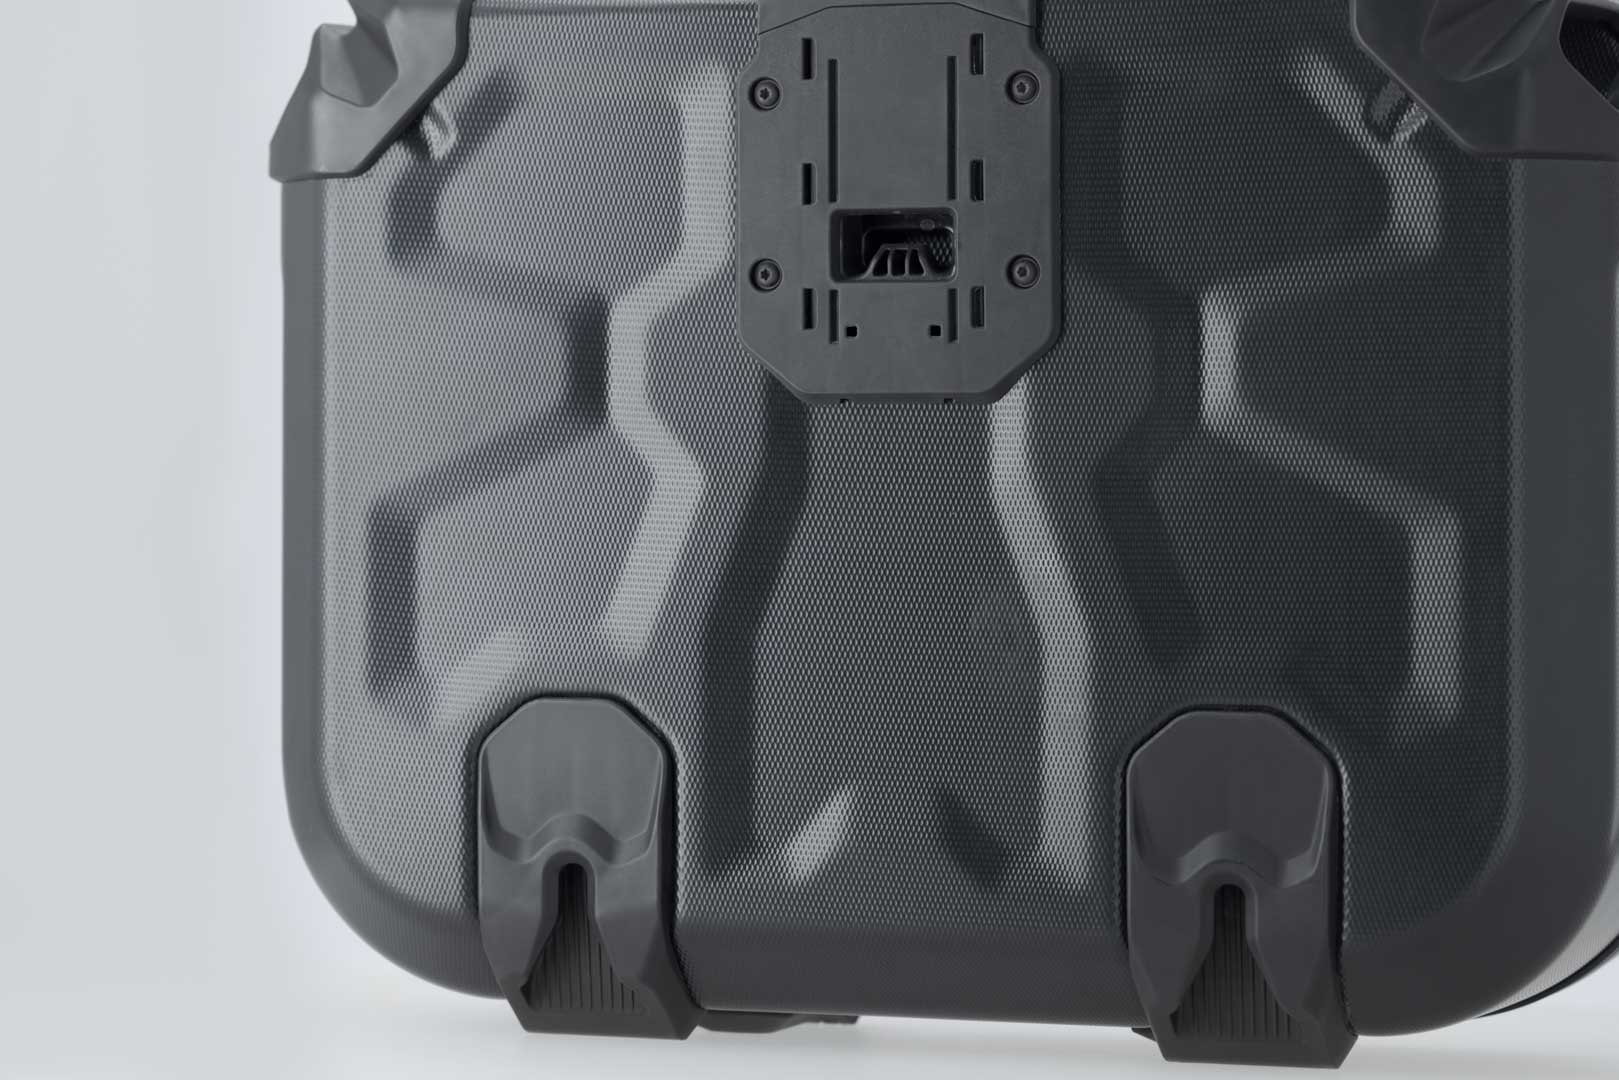 DUSC hard case system Honda NC750X/XD (20-) 41/41 litre Black